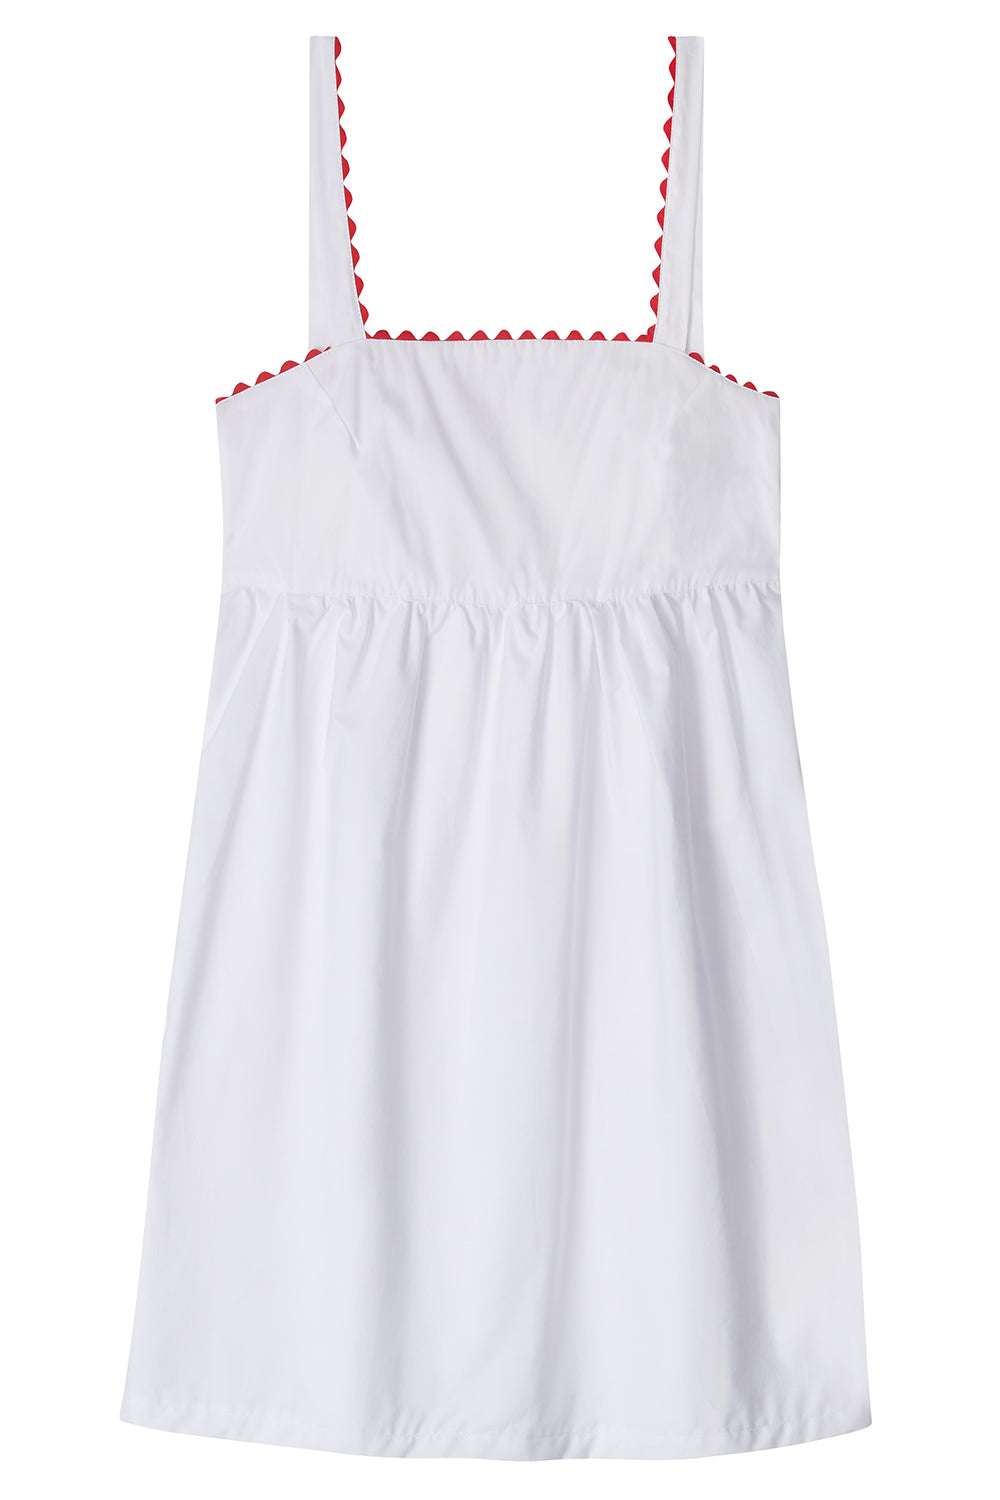 White Mini Nightdress with Red Ric Rac - 100% Cotton Poplin